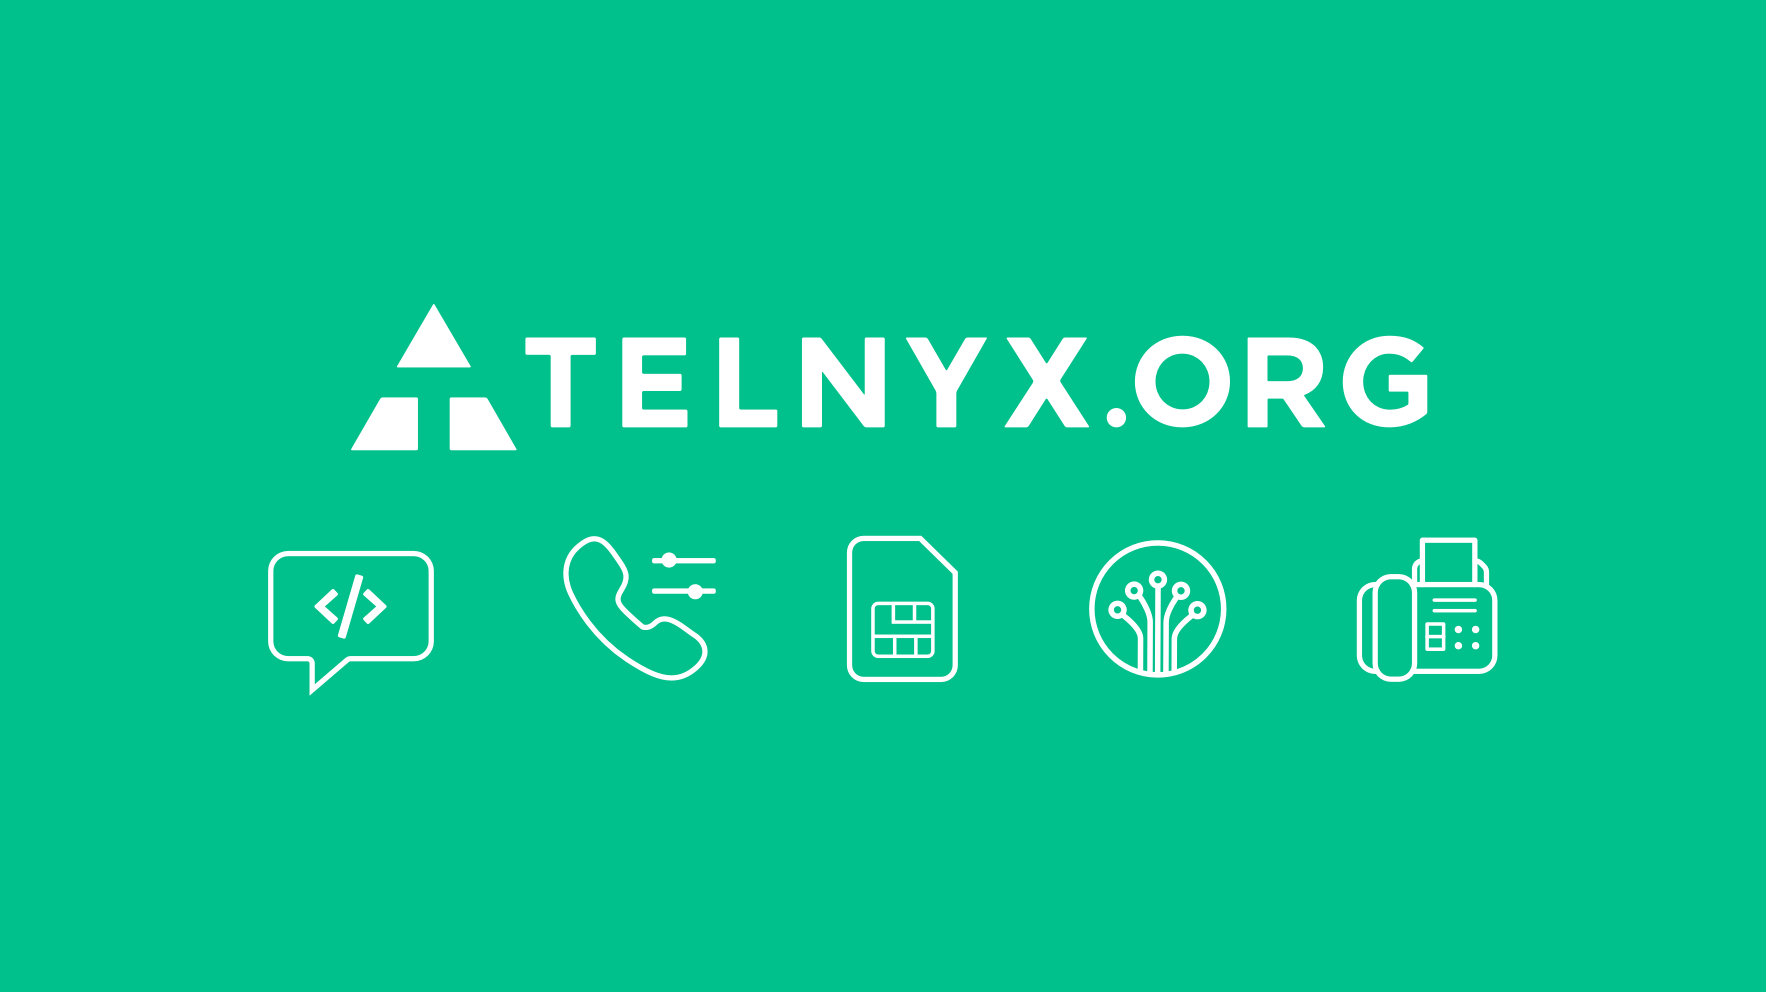 Telnyx.org impact initiative